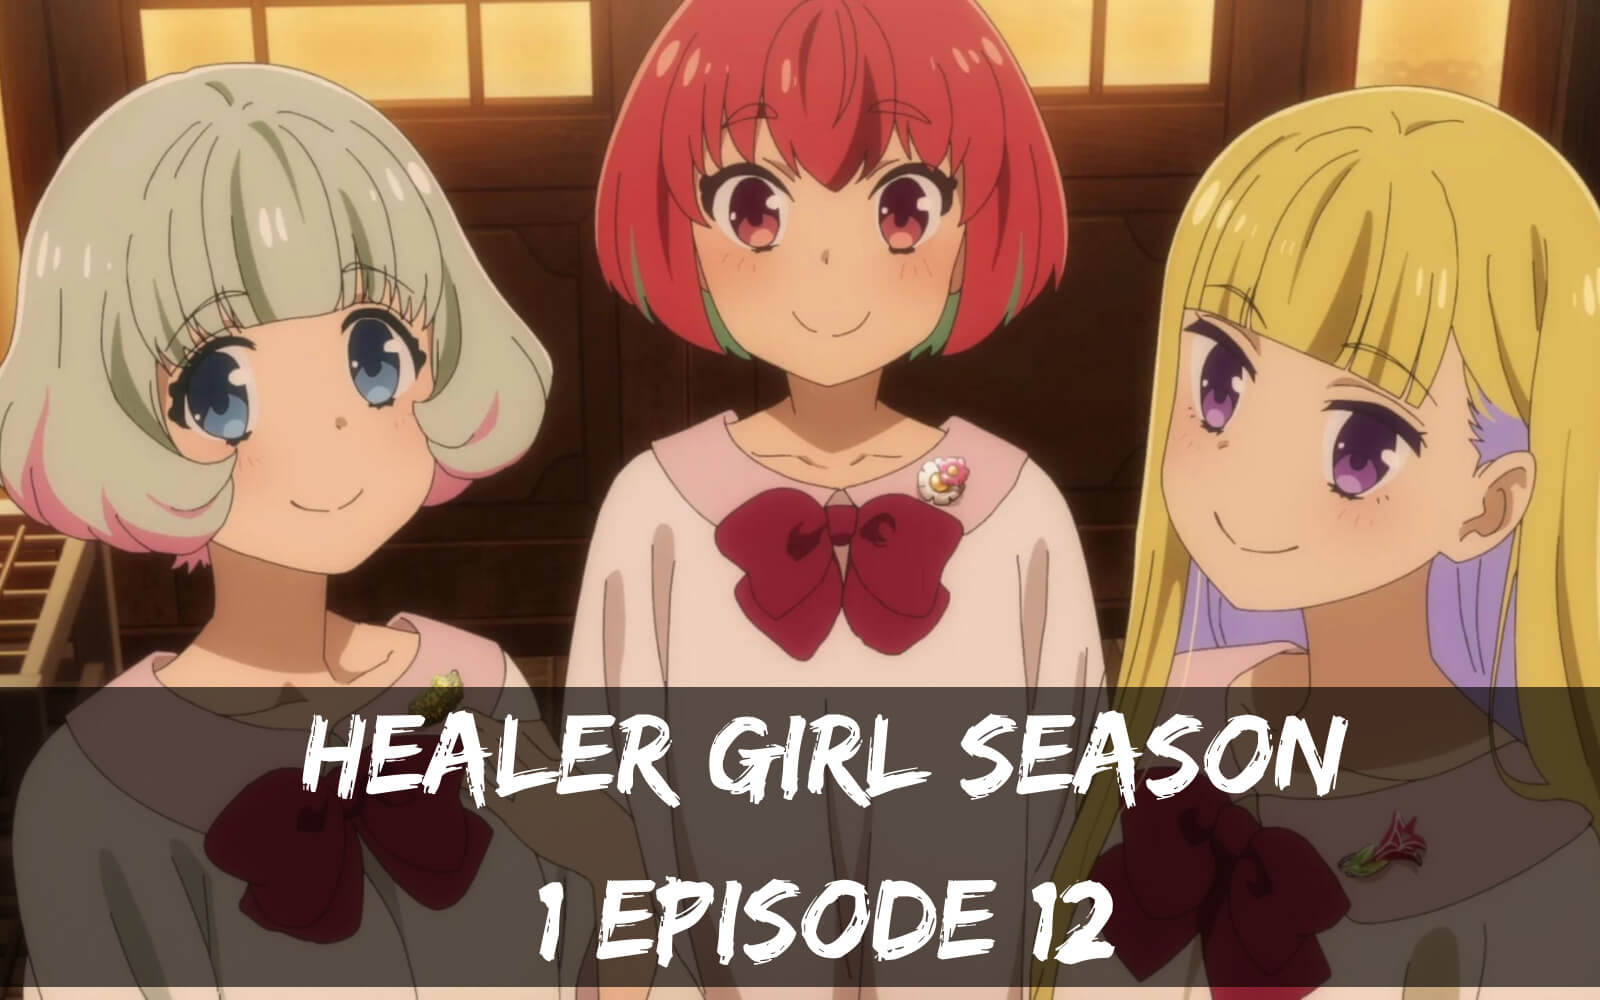 Healer Girl Season 1 Episode 12 release date